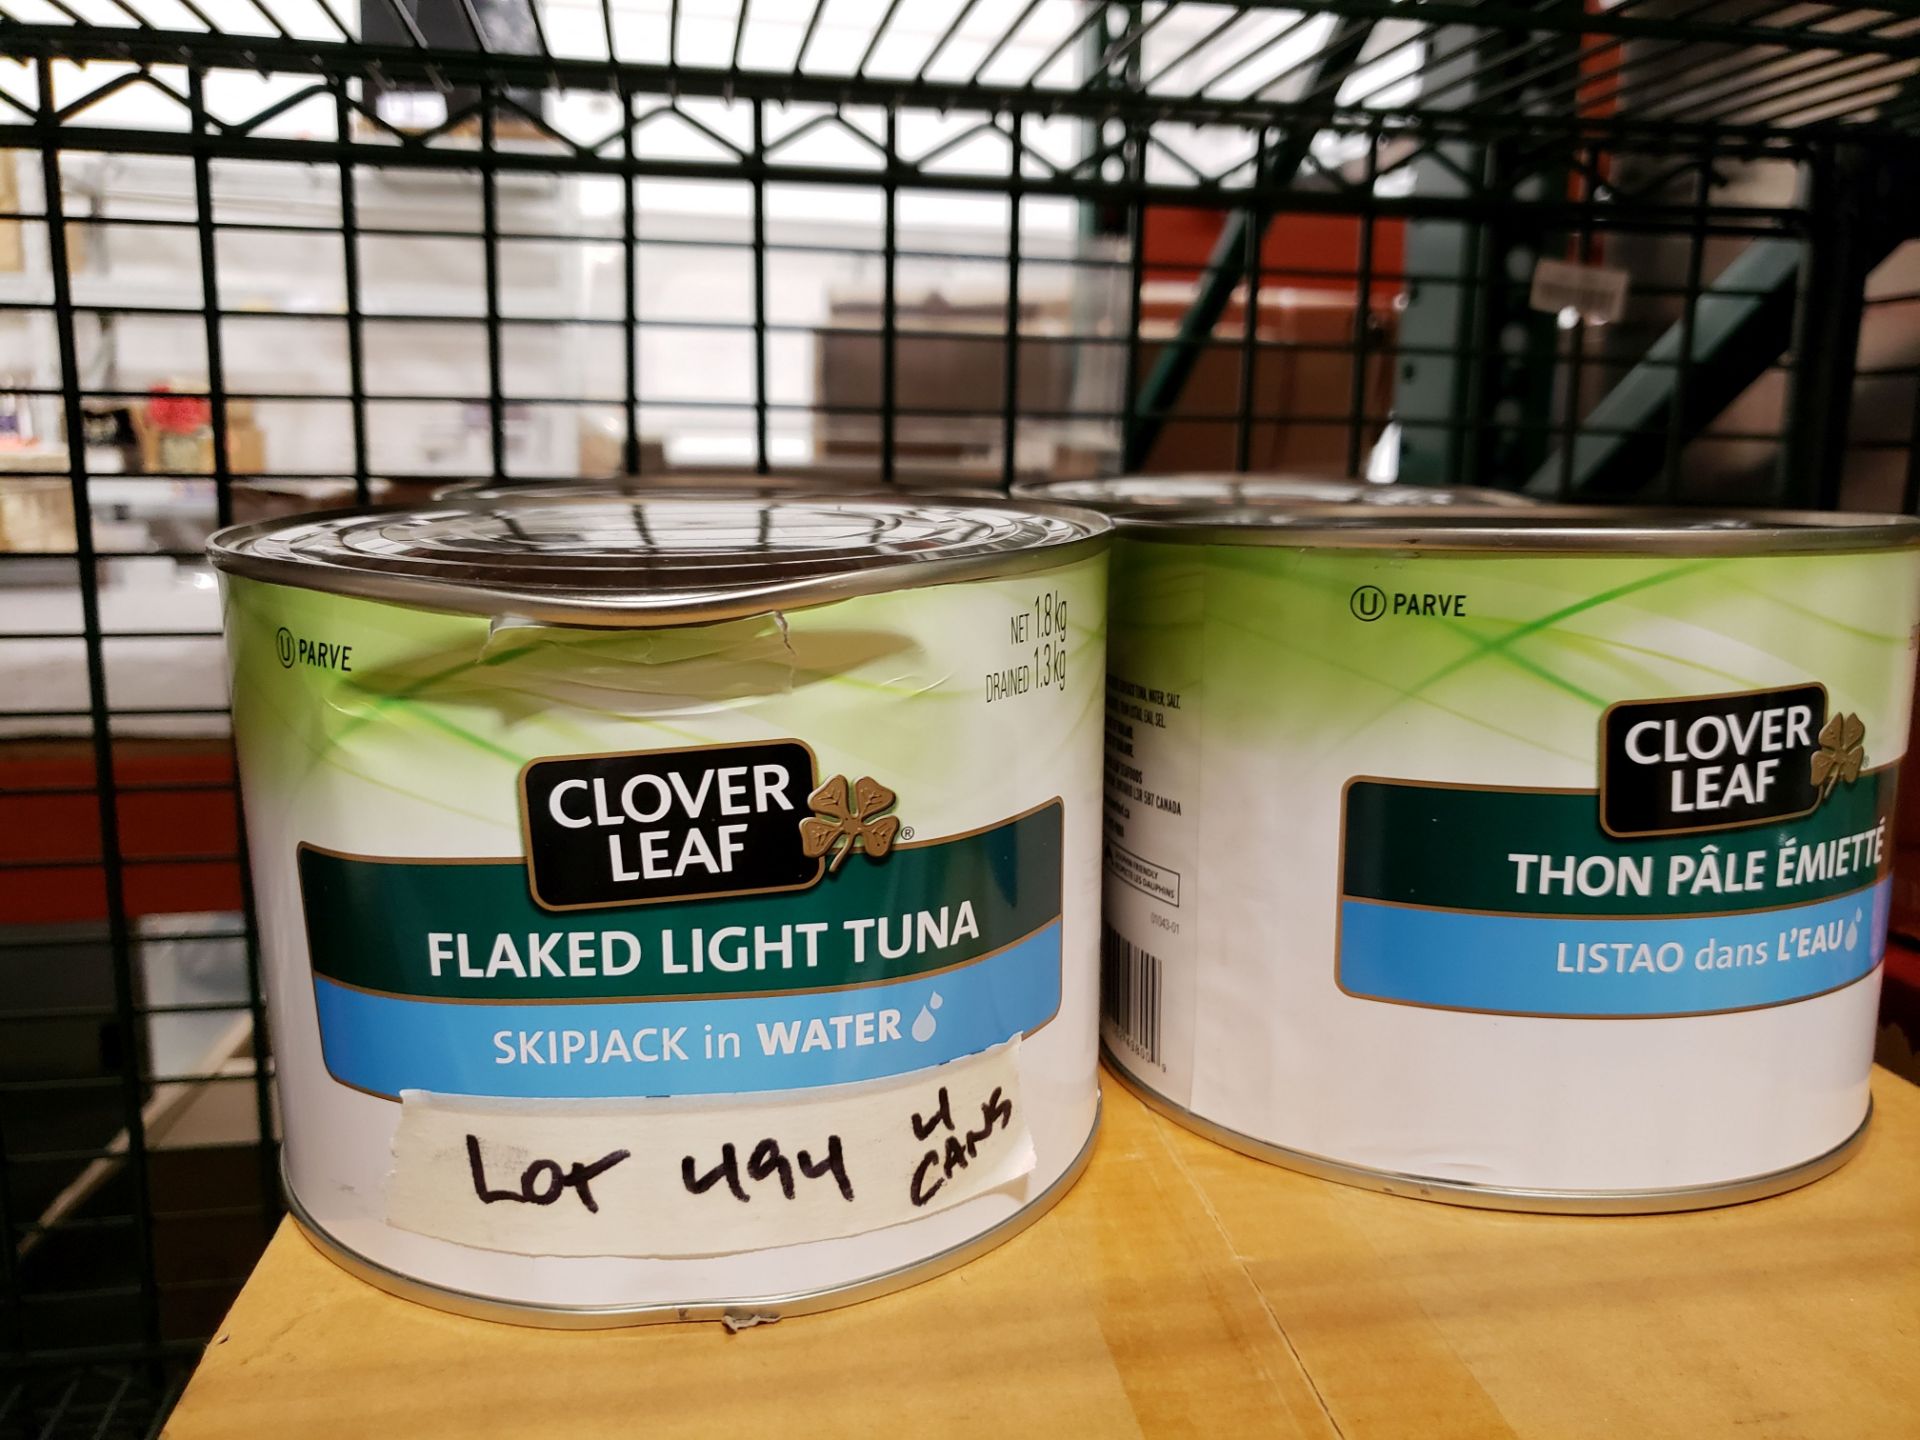 Cloverleaf Slipjack Flaked Light Tuna in Water - 4 x 1.8kg Cans